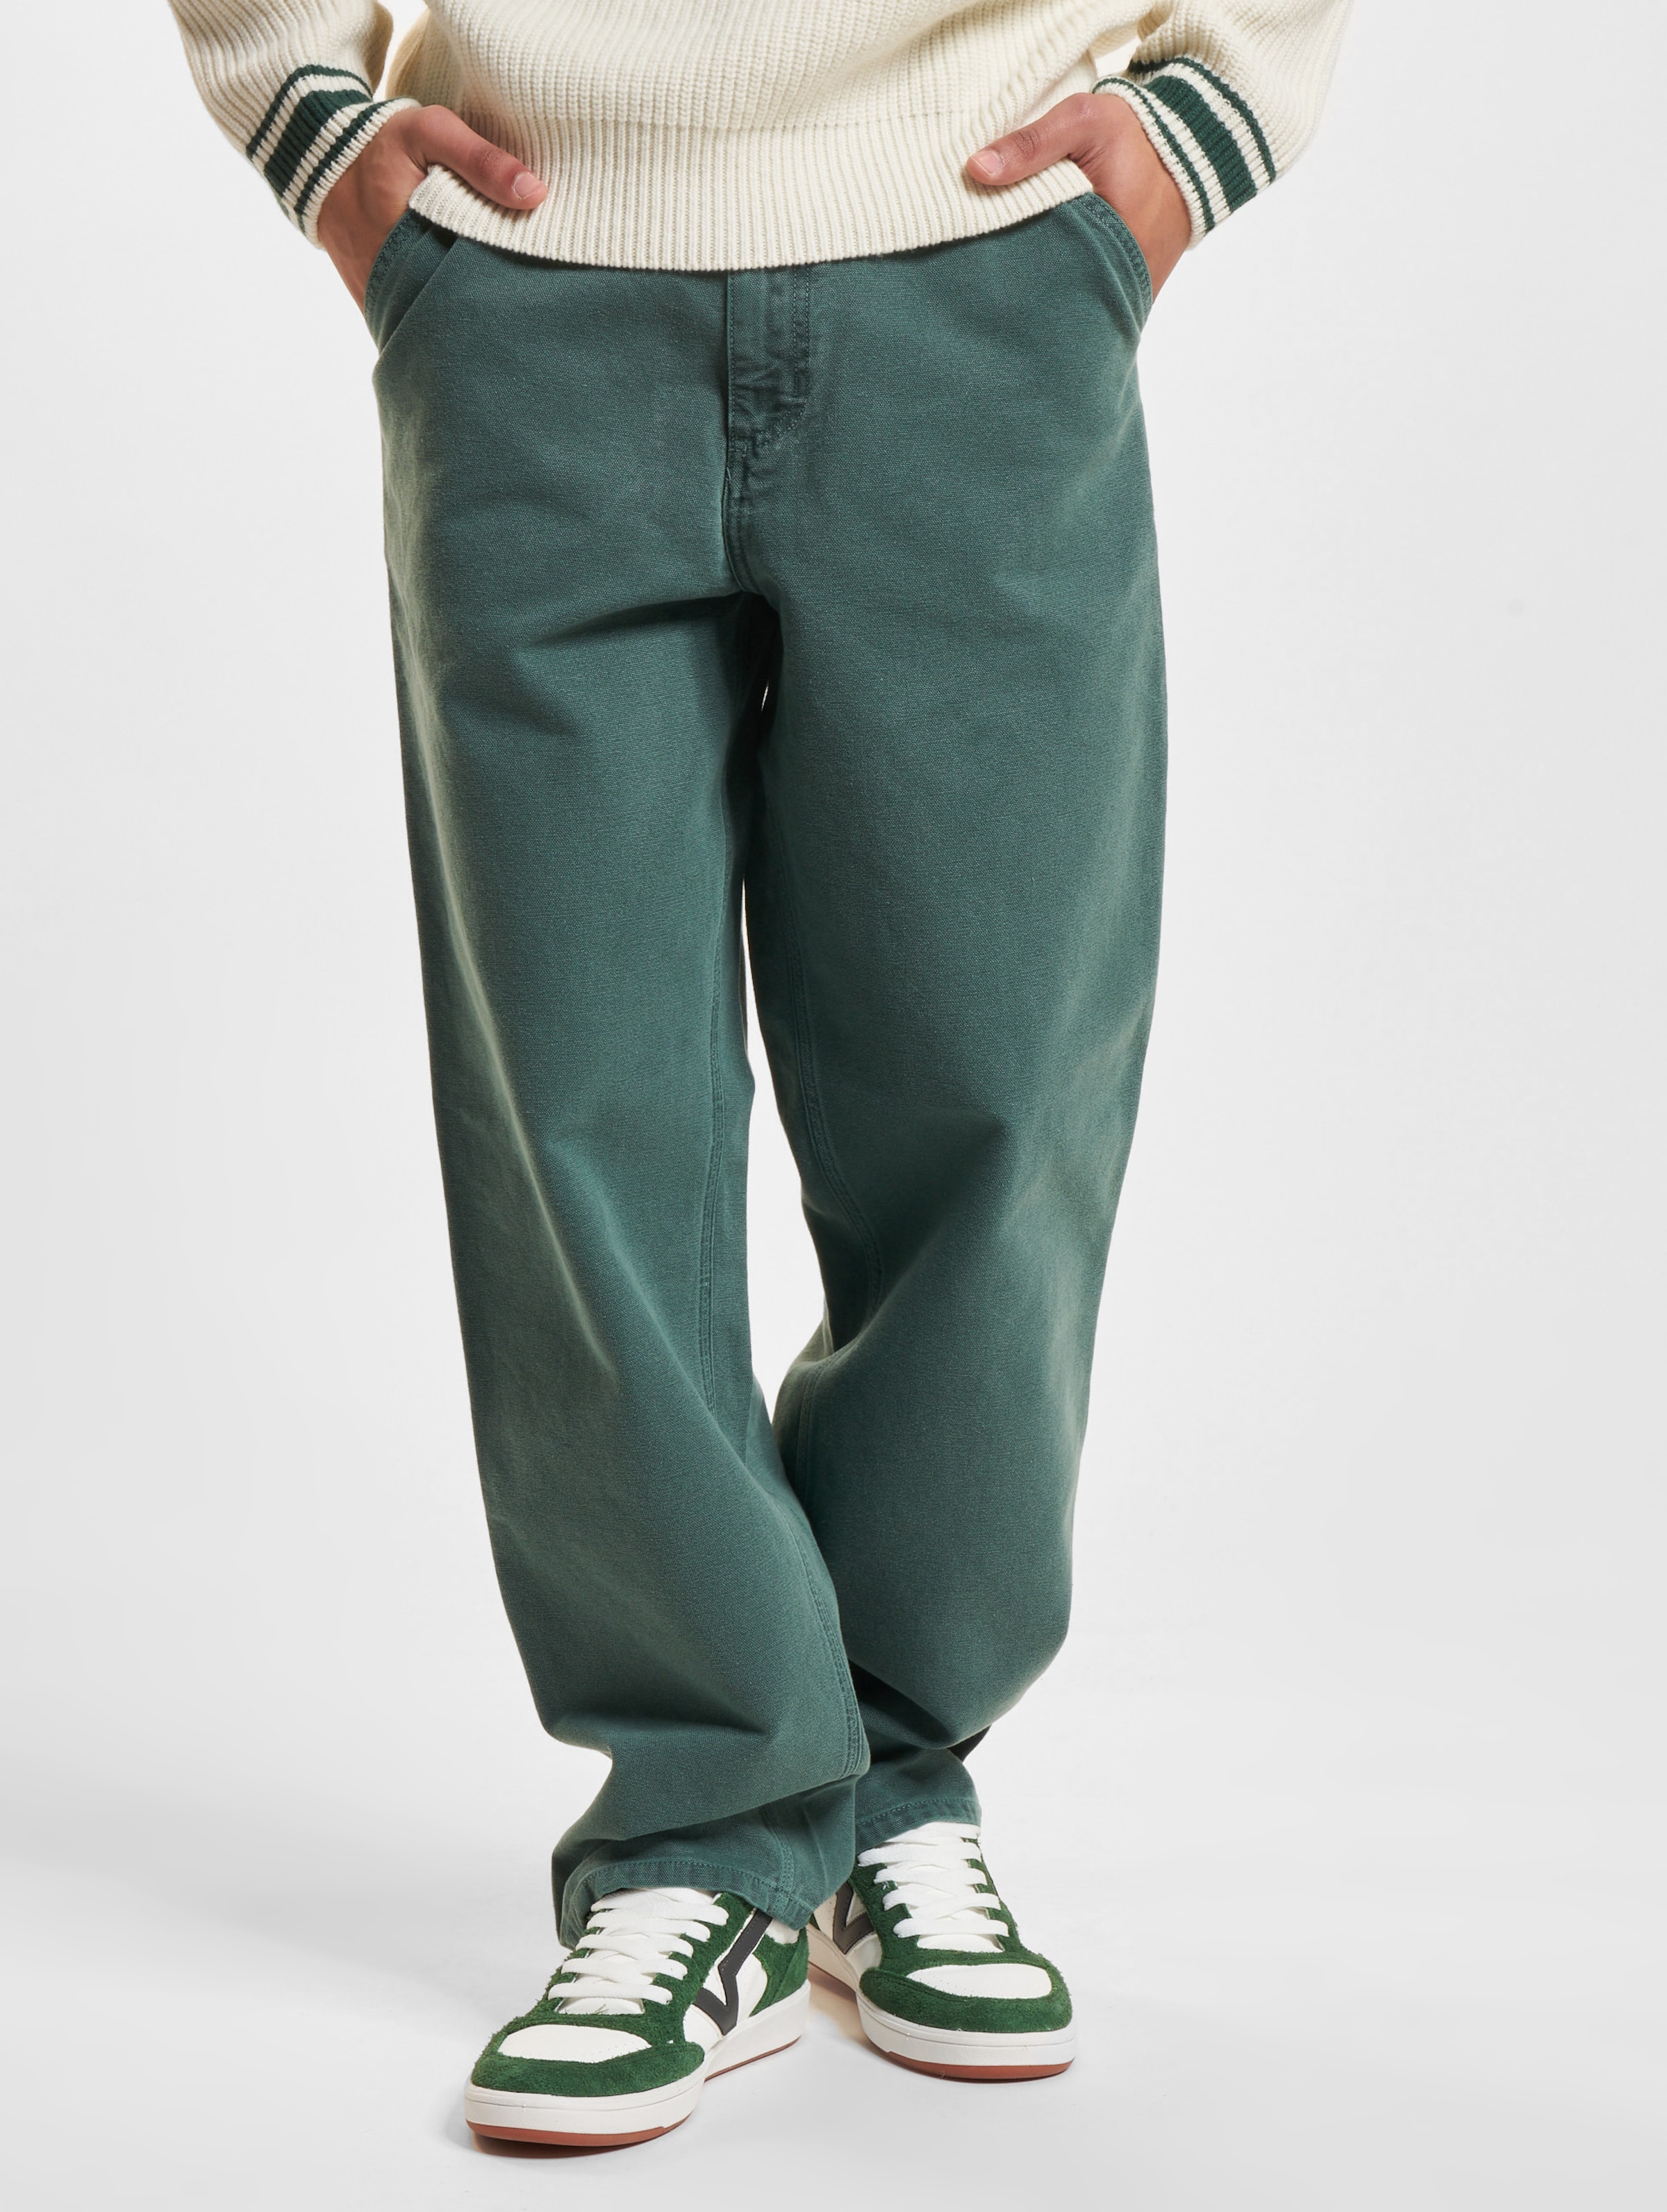 Carhartt WIP Simple Jeans Mannen op kleur groen, Maat 3132